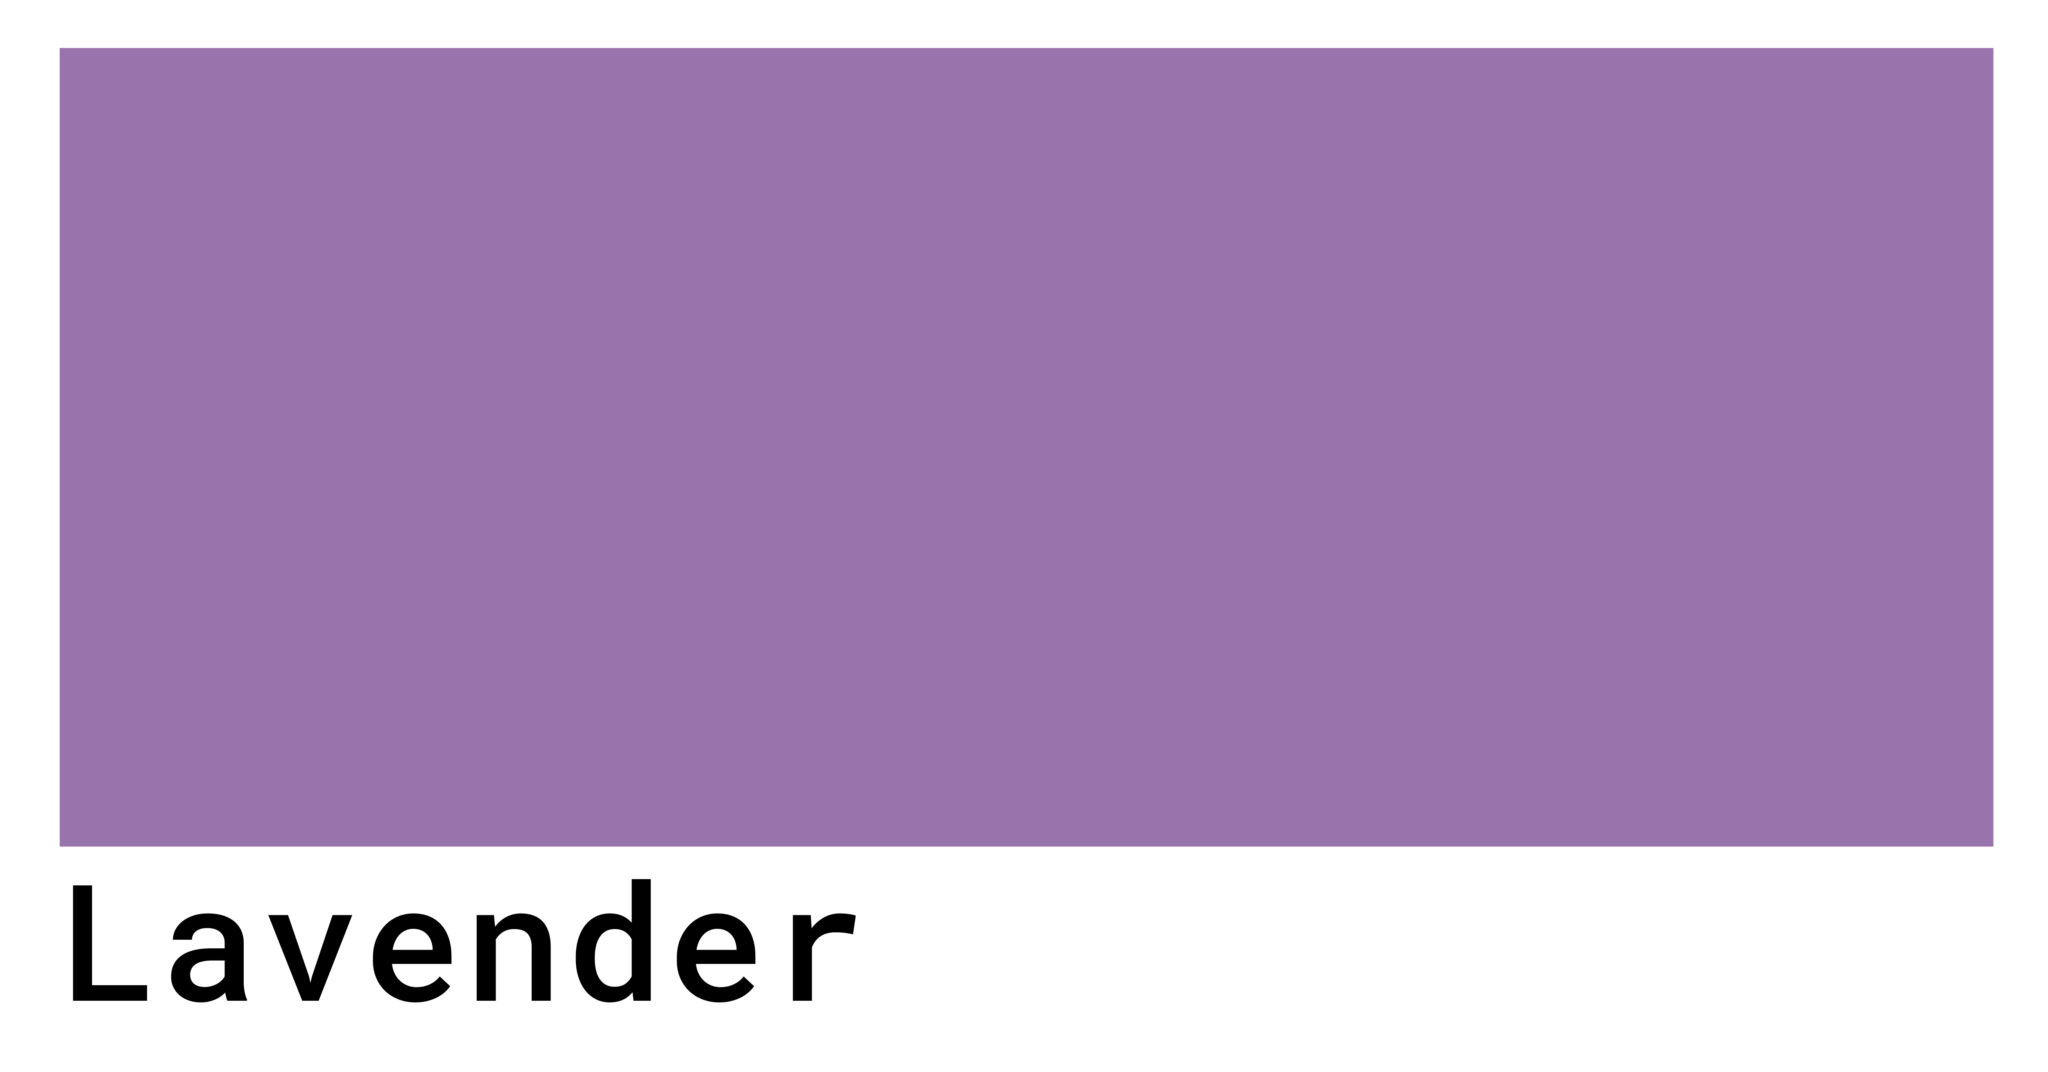 4. Lavender - wide 6